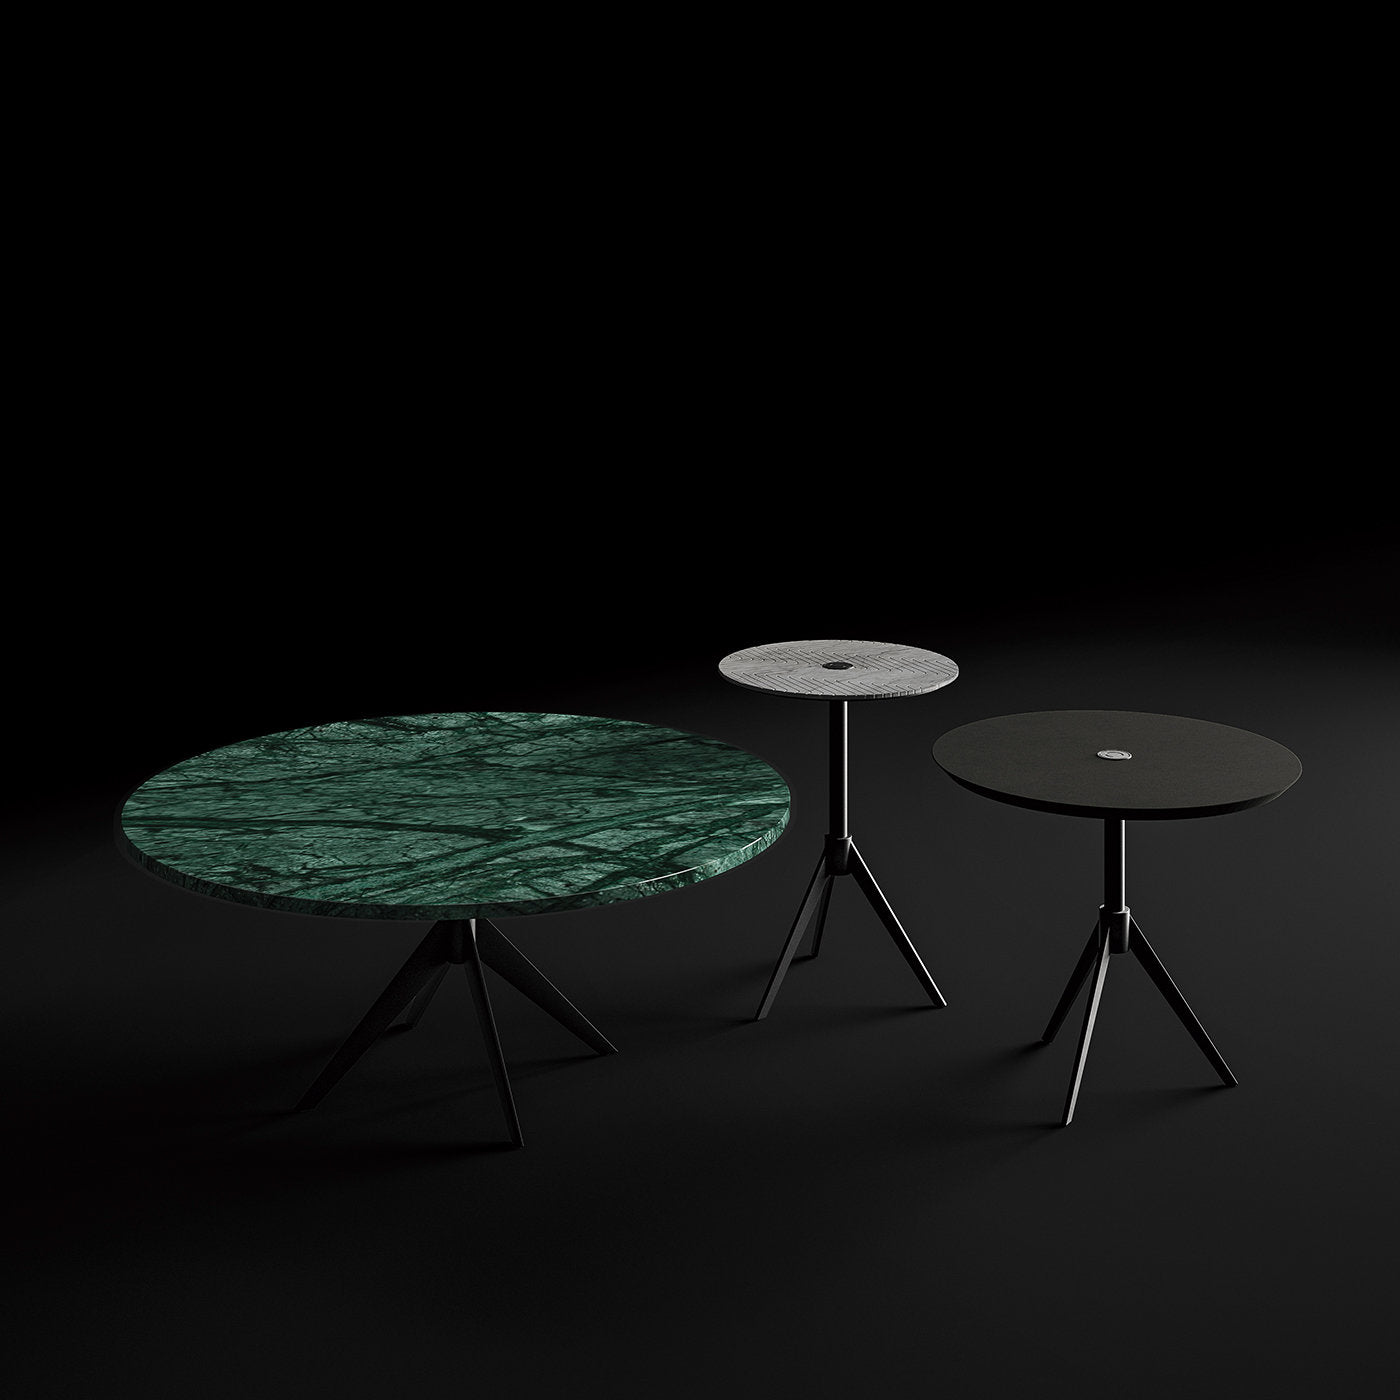 Medium Coffee Table with Alkantara marble top - Alternative view 1